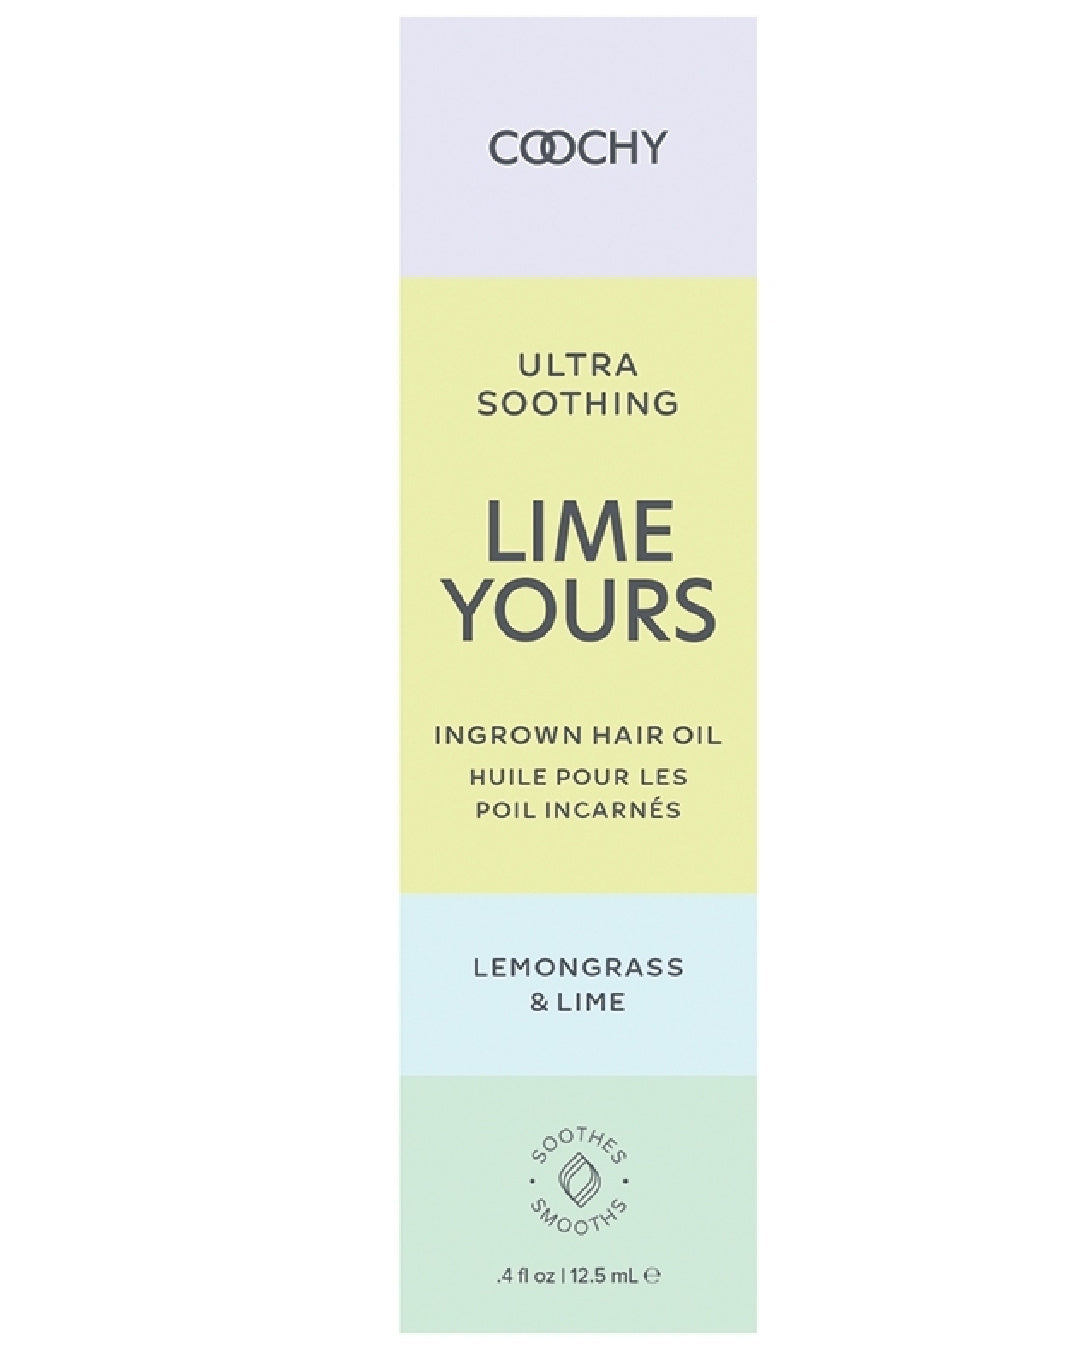 Coochy Ultra Soothing Ingrown Hair Oil-Lemongrass Lime box